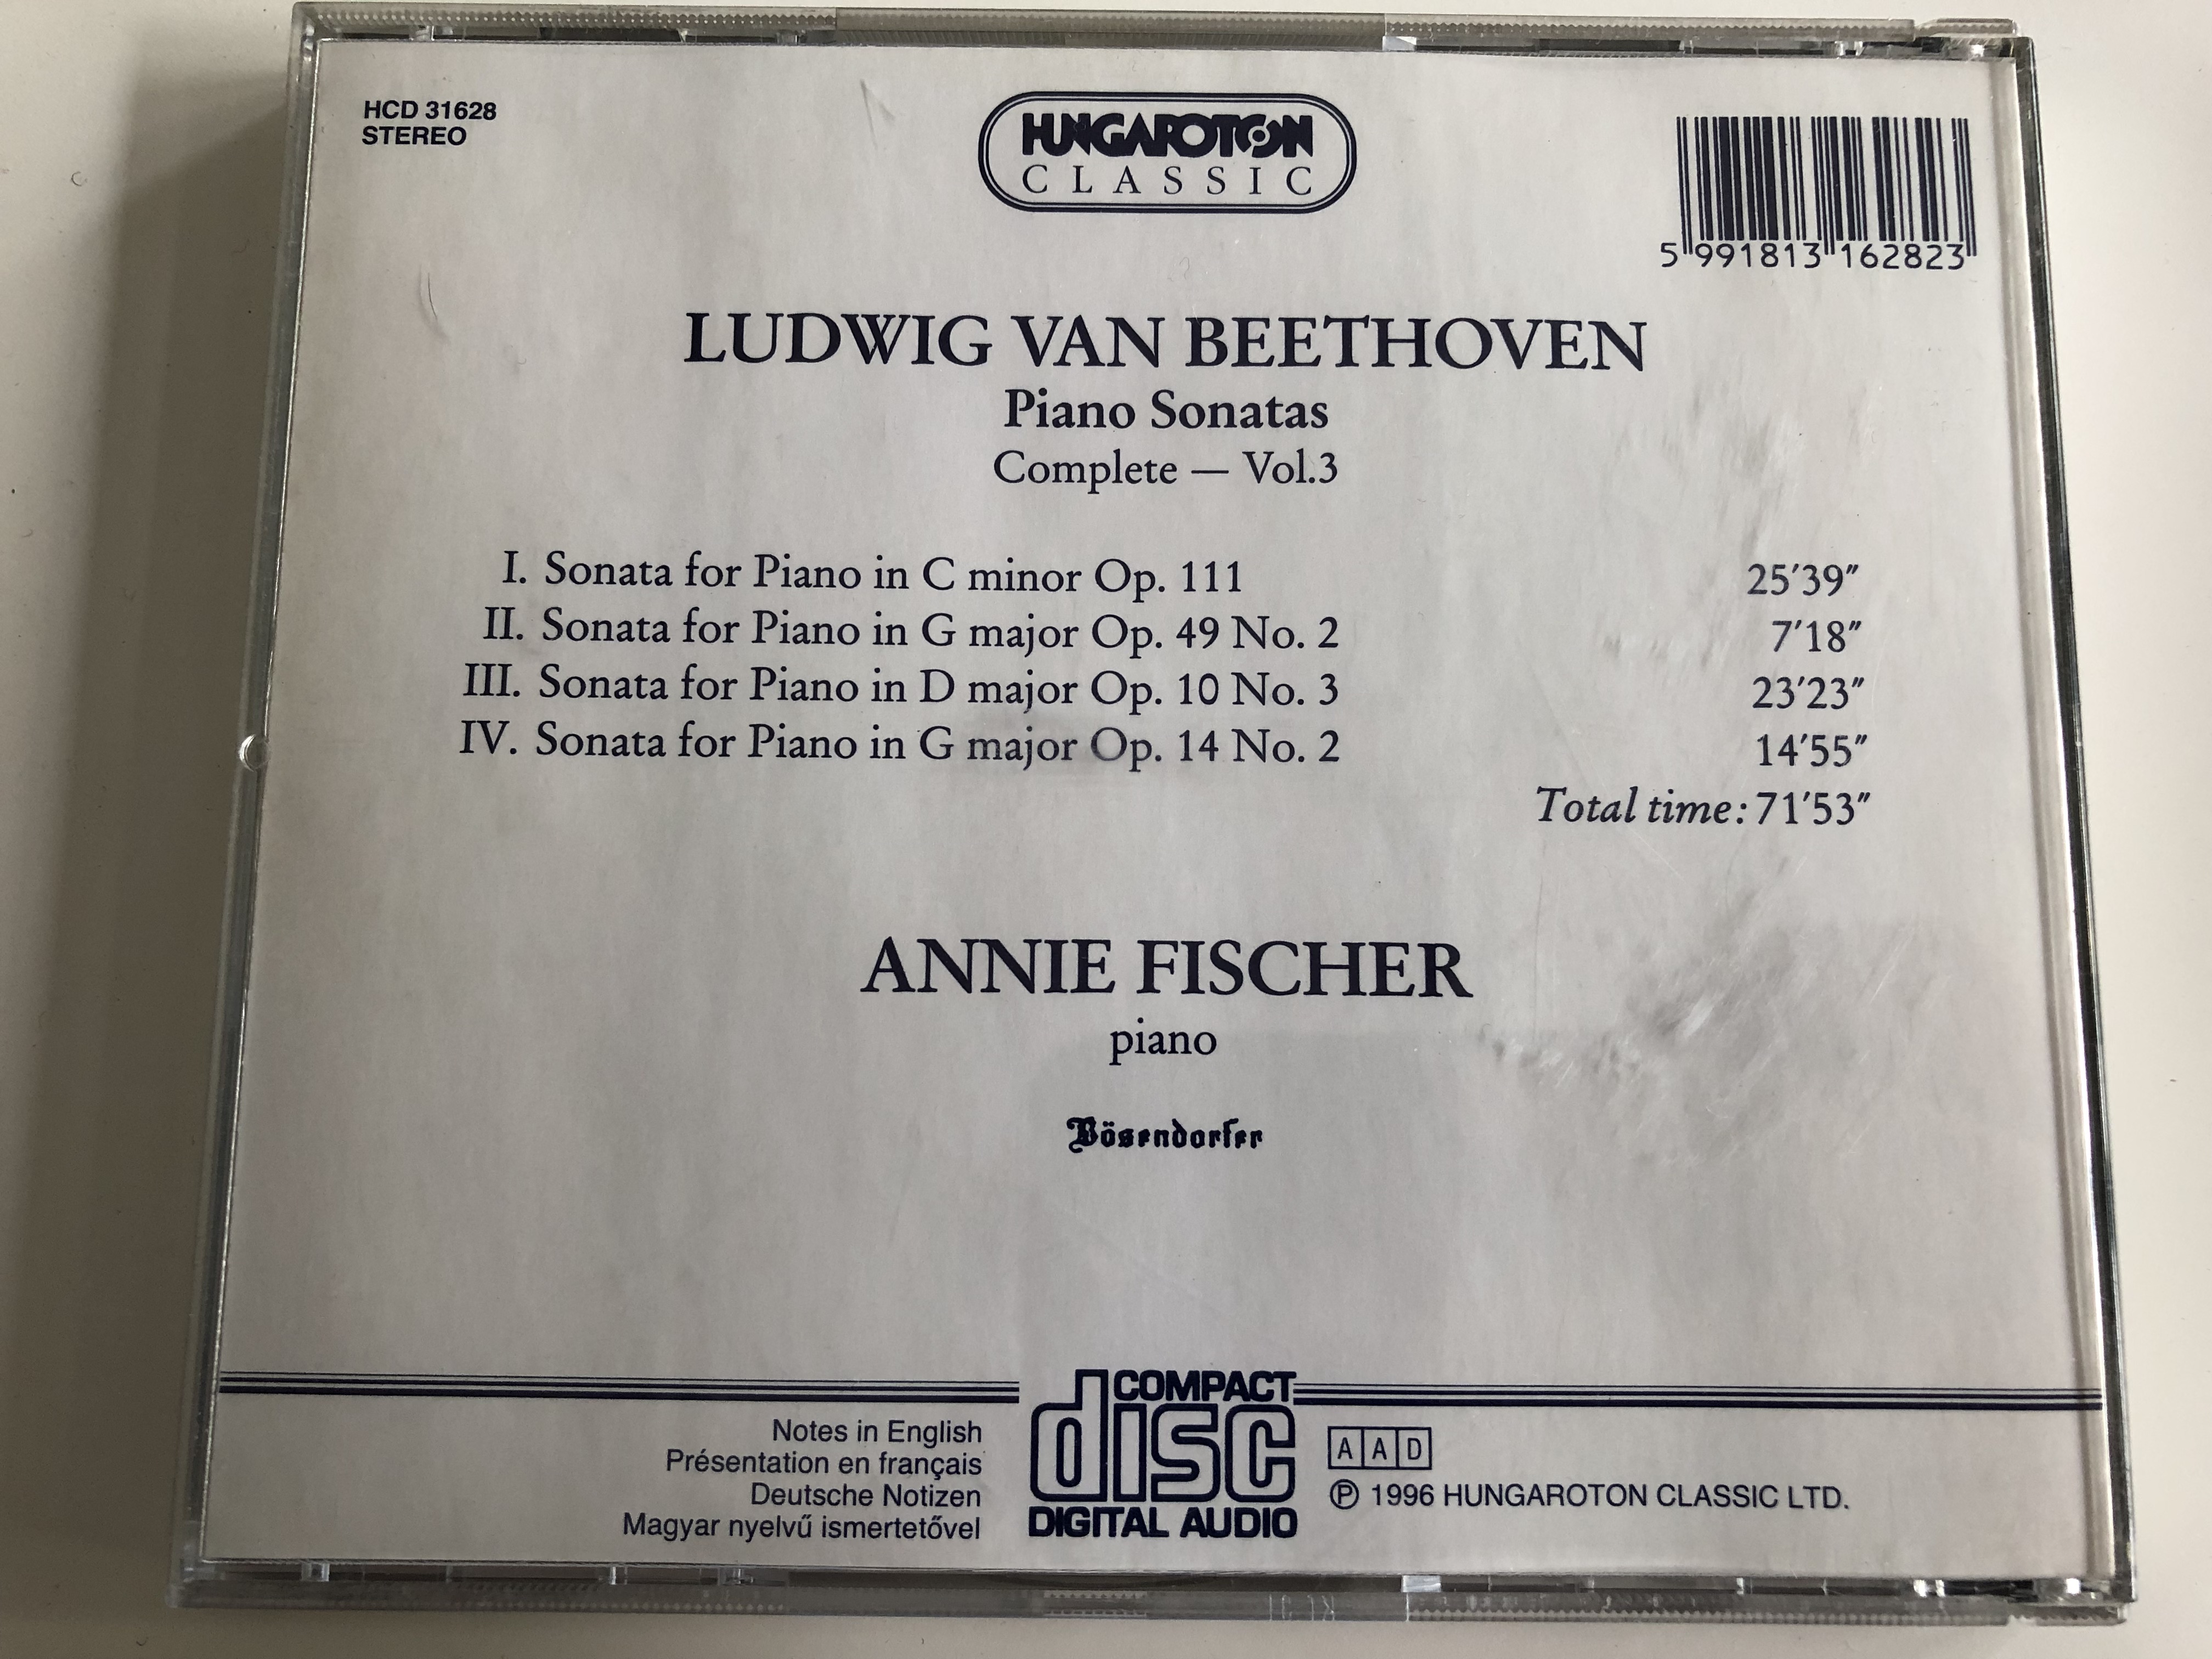 annie-fischer-ludwig-van-beethoven-piano-sonatas-complete-vol.-3-audio-cd-1996-hungaroton-classic-hcd-31628-2-.jpg